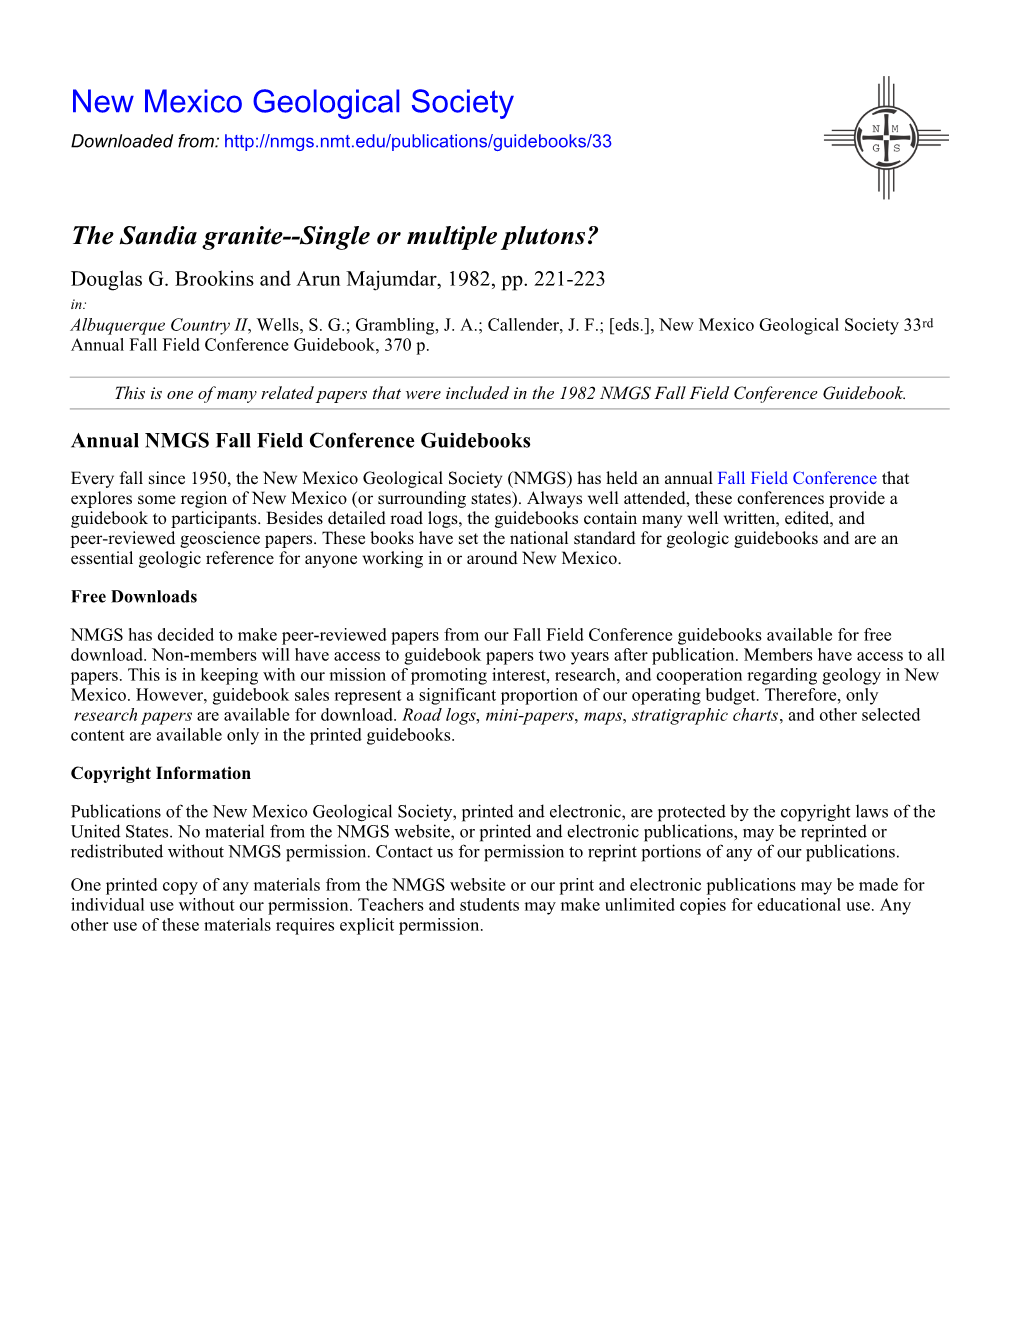 The Sandia Granite--Single Or Multiple Plutons? Douglas G